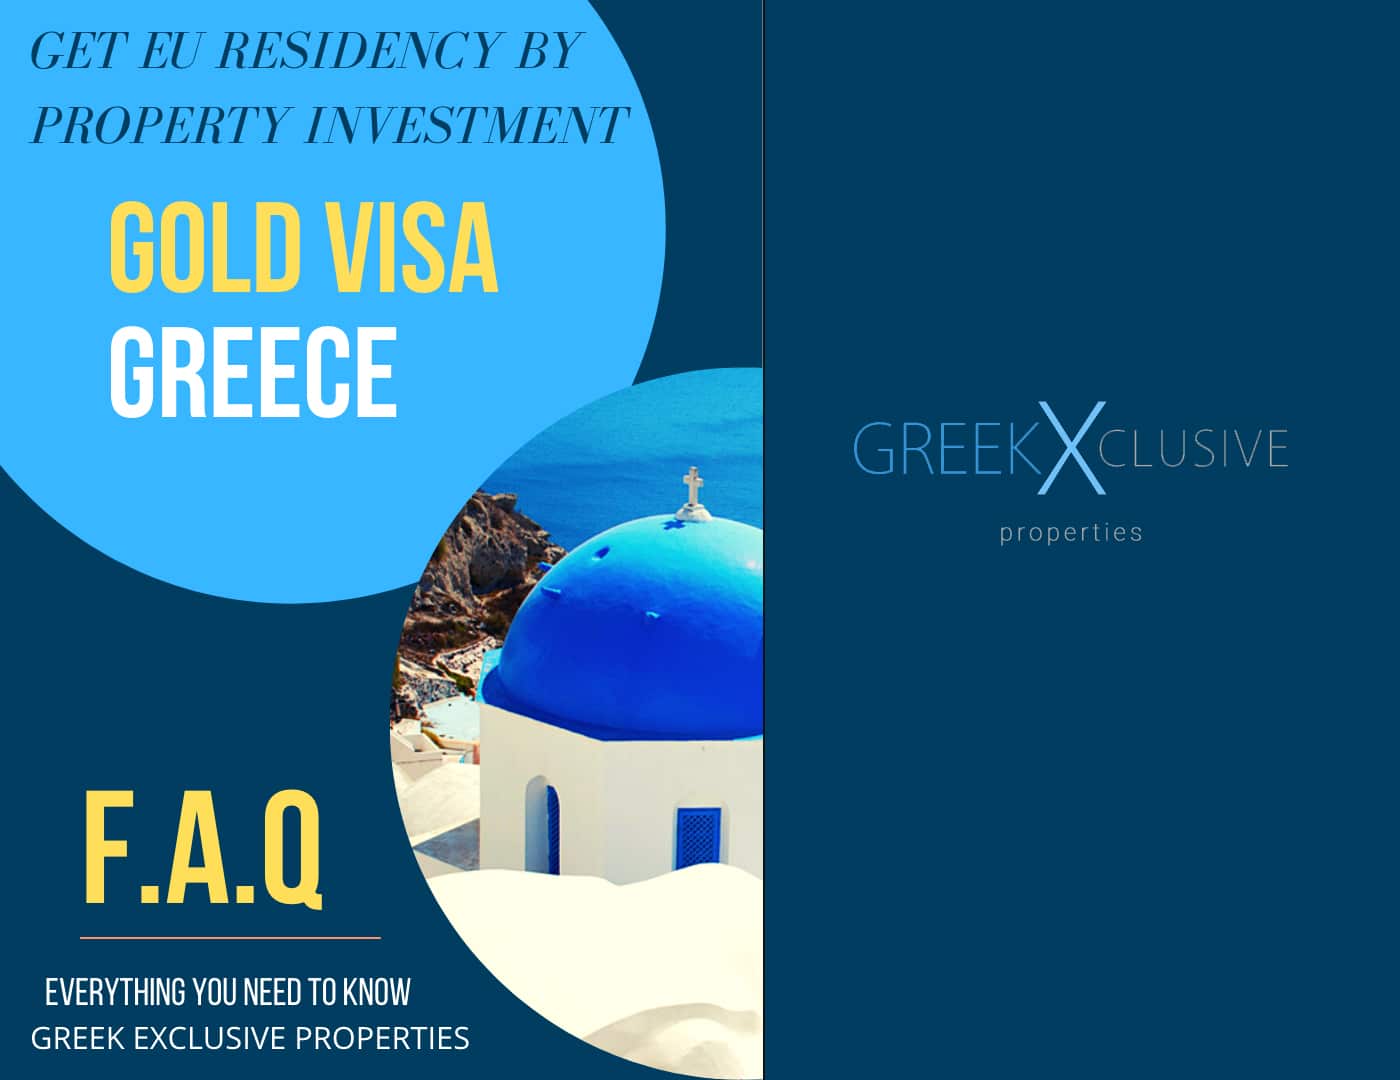 Faq About The Gold Visa Program In Greece Get Eu Residency